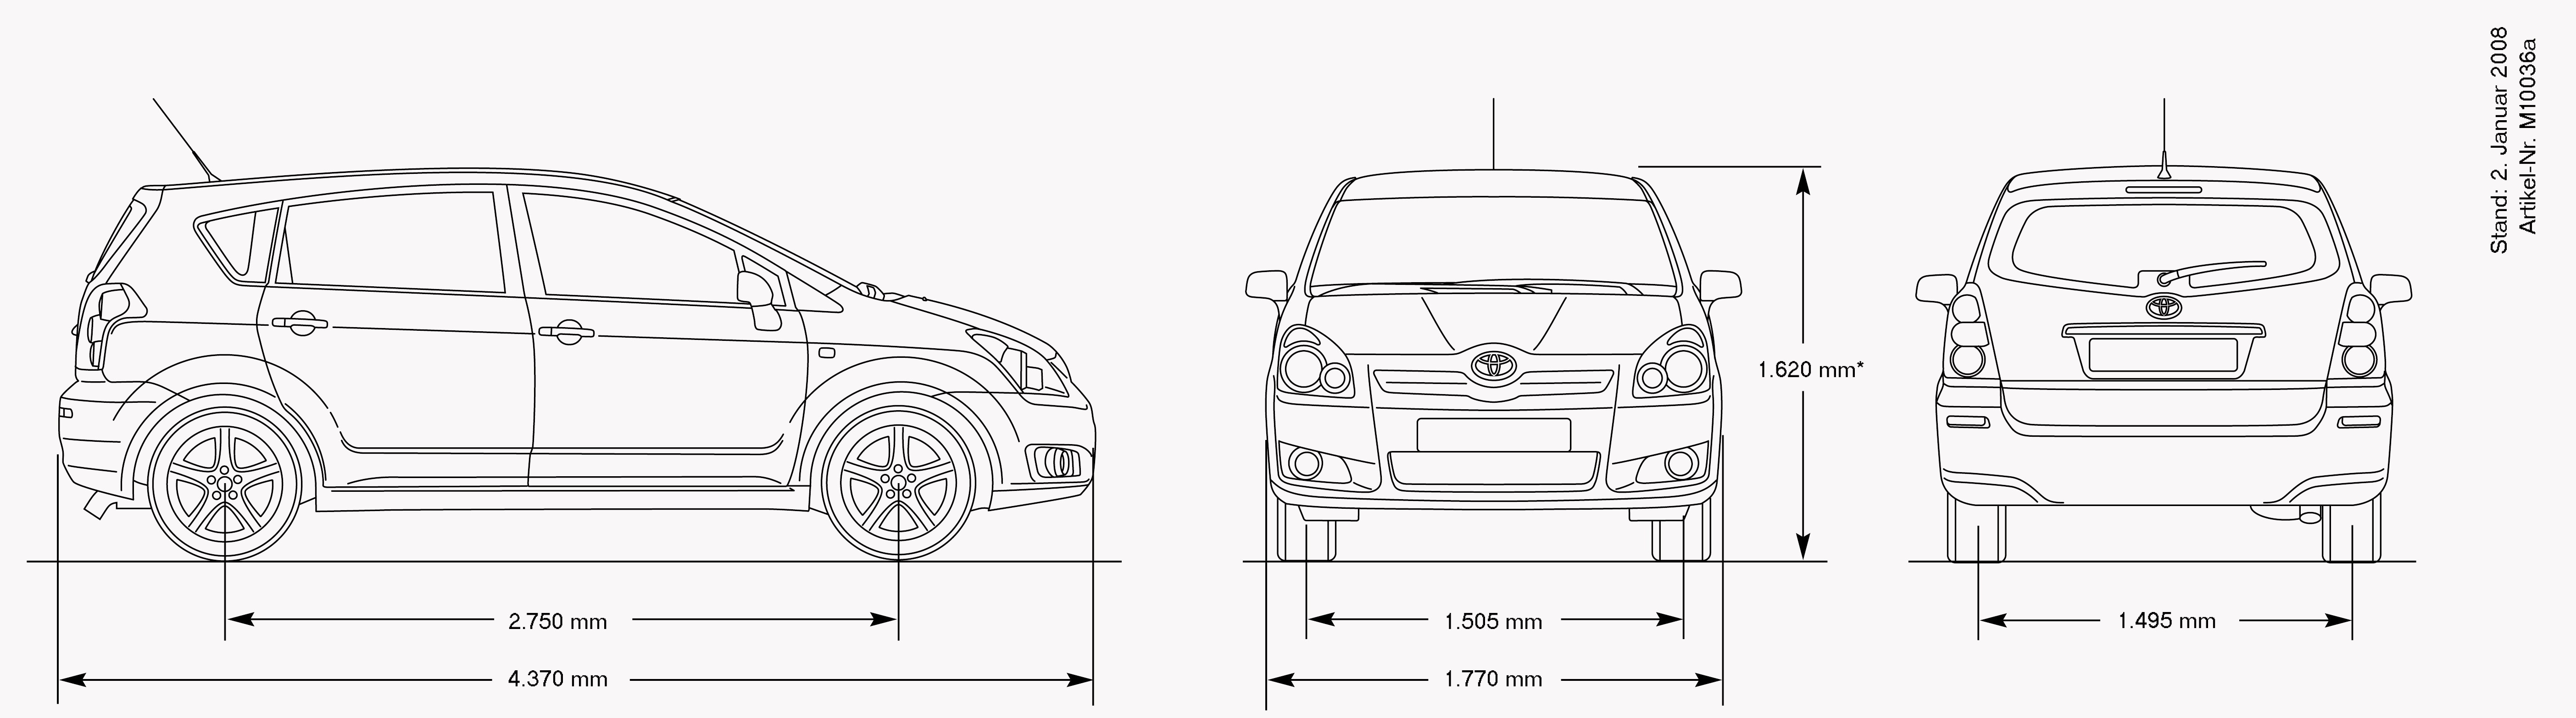 Toyota Corolla Verso blueprint